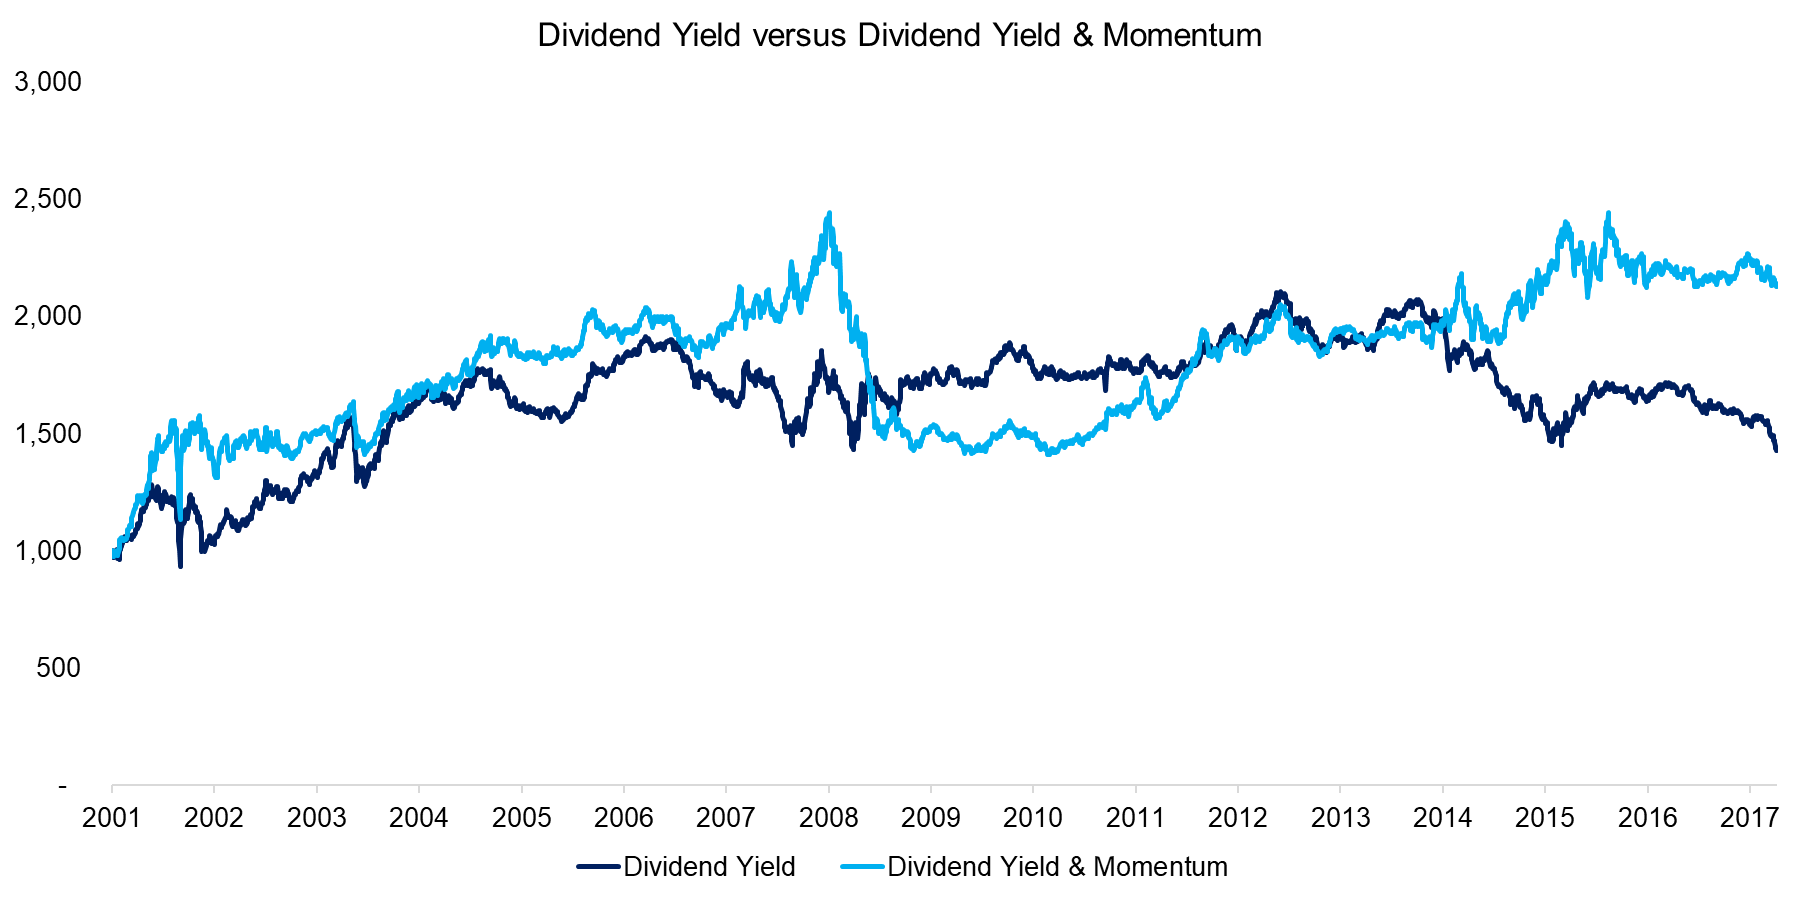 Dividend Yield versus Dividend Yield & Momentum